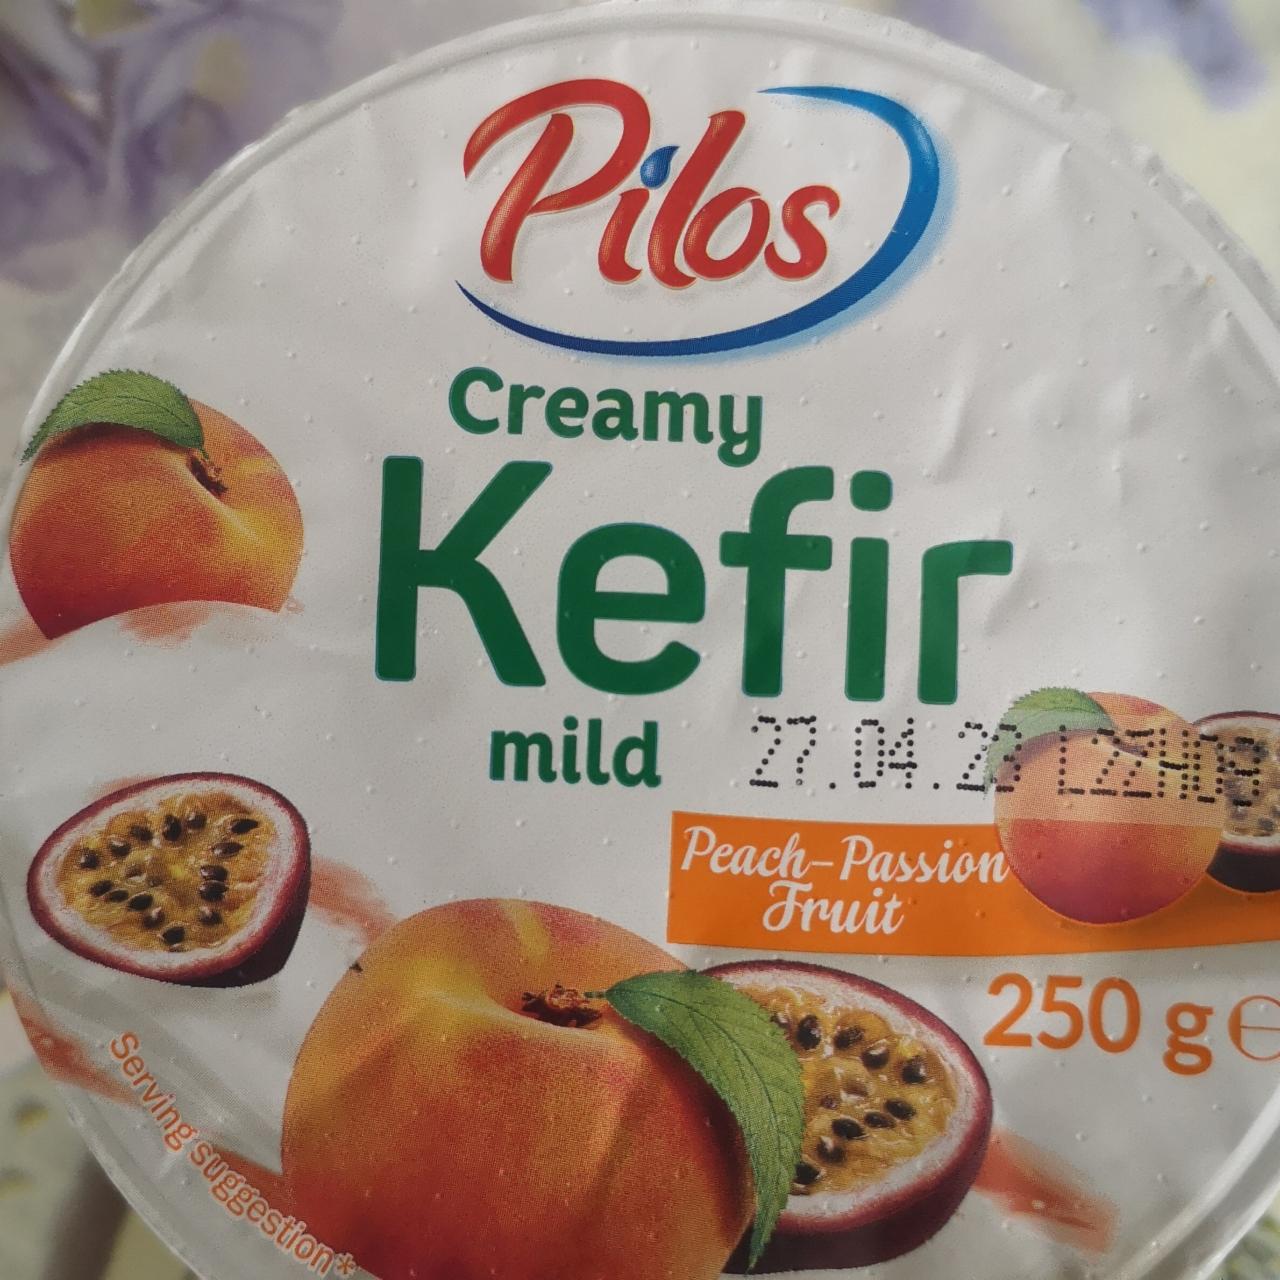 Képek - Creamy Kefir mild Peach-Passion Fruit Pilos